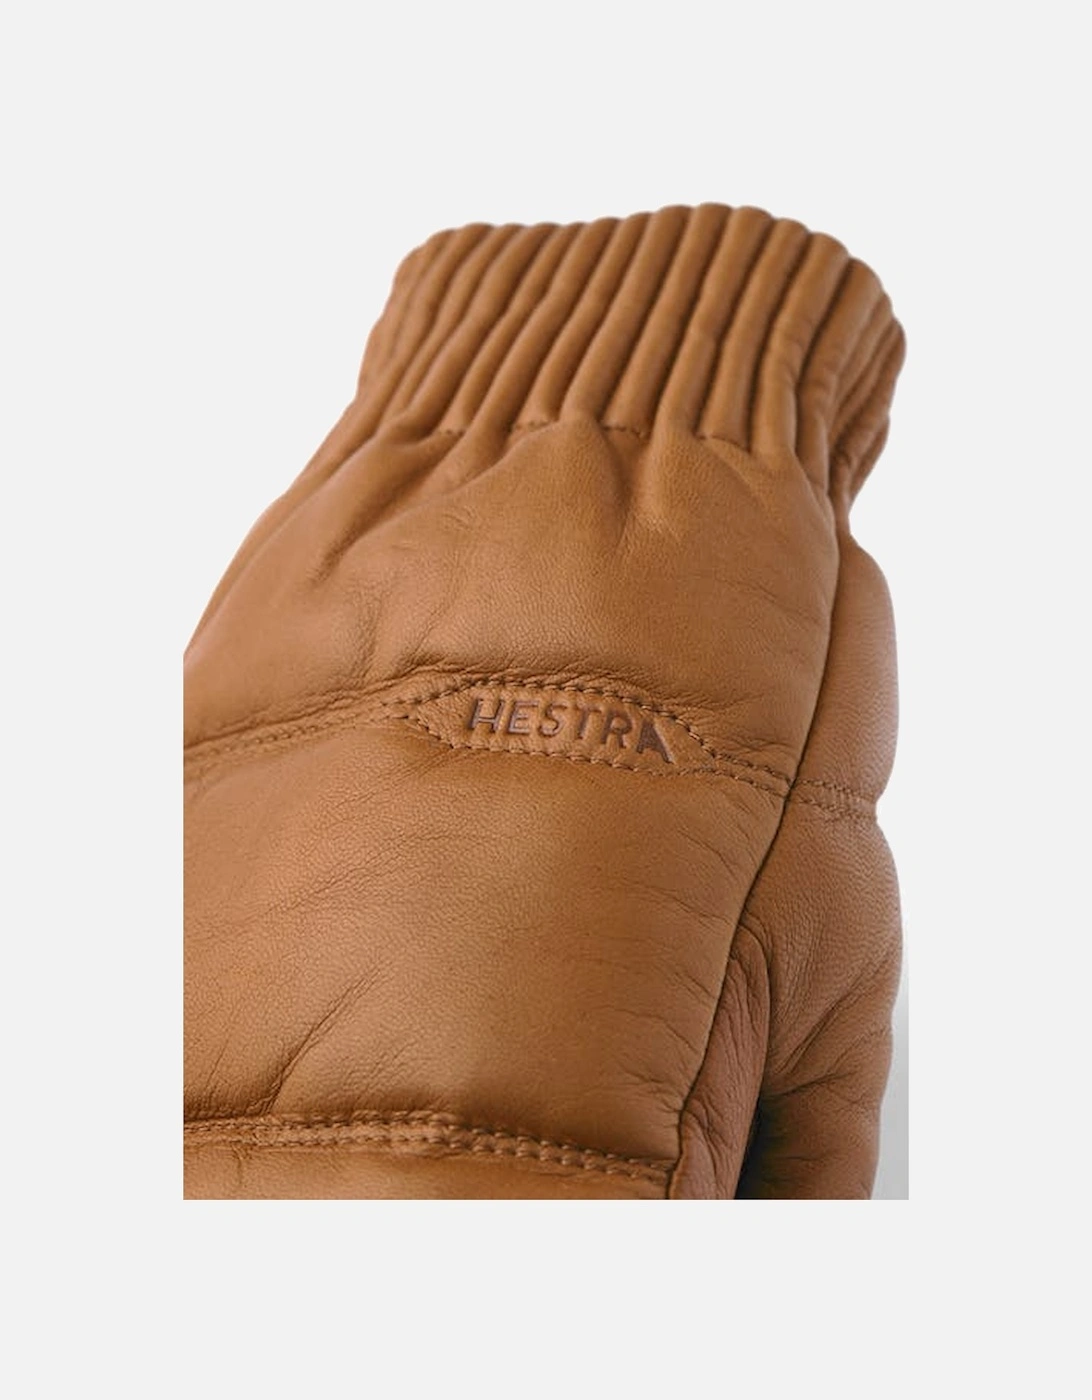 Valdres Gloves - Cork